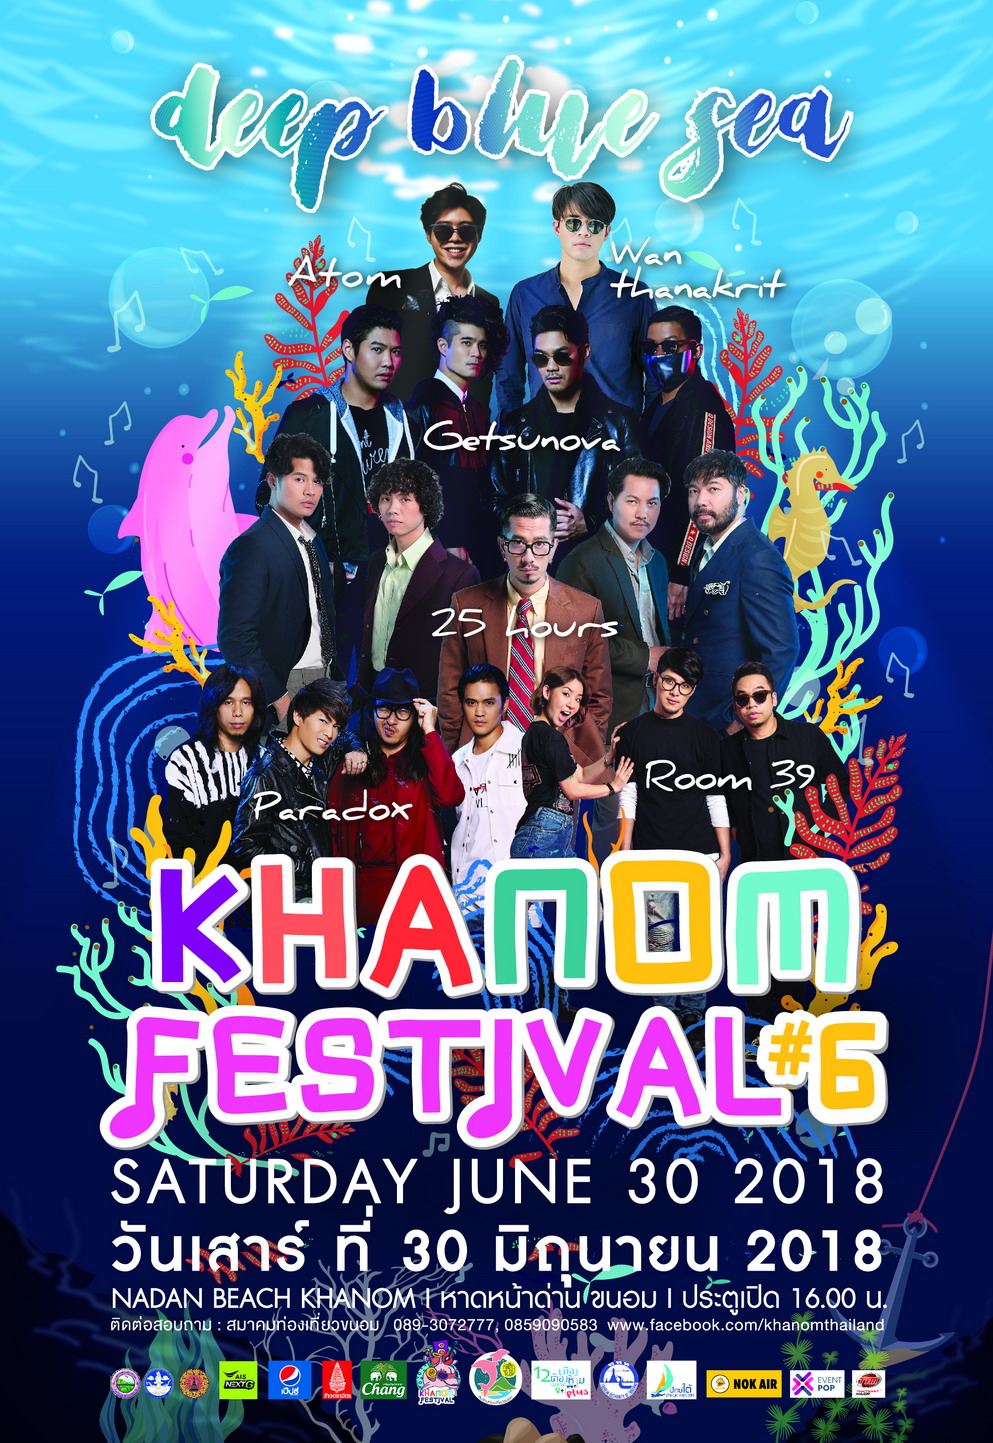 Khanom Festival ครั้งที่ 6 ตอน Deep Blue Sea